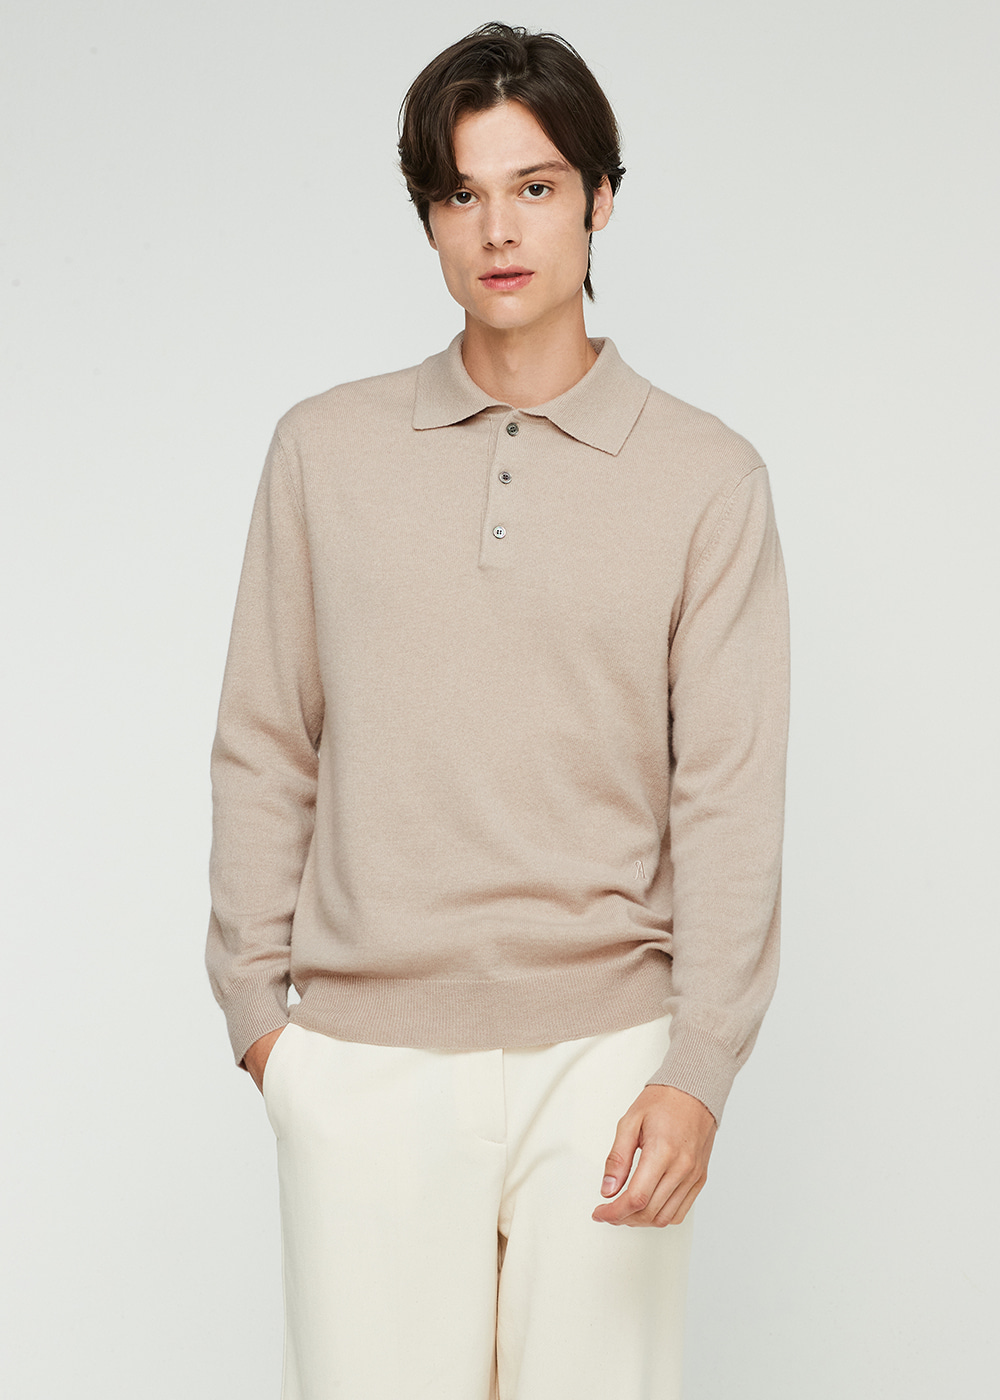 A LOGO shirt pullover (skin beige)  20%